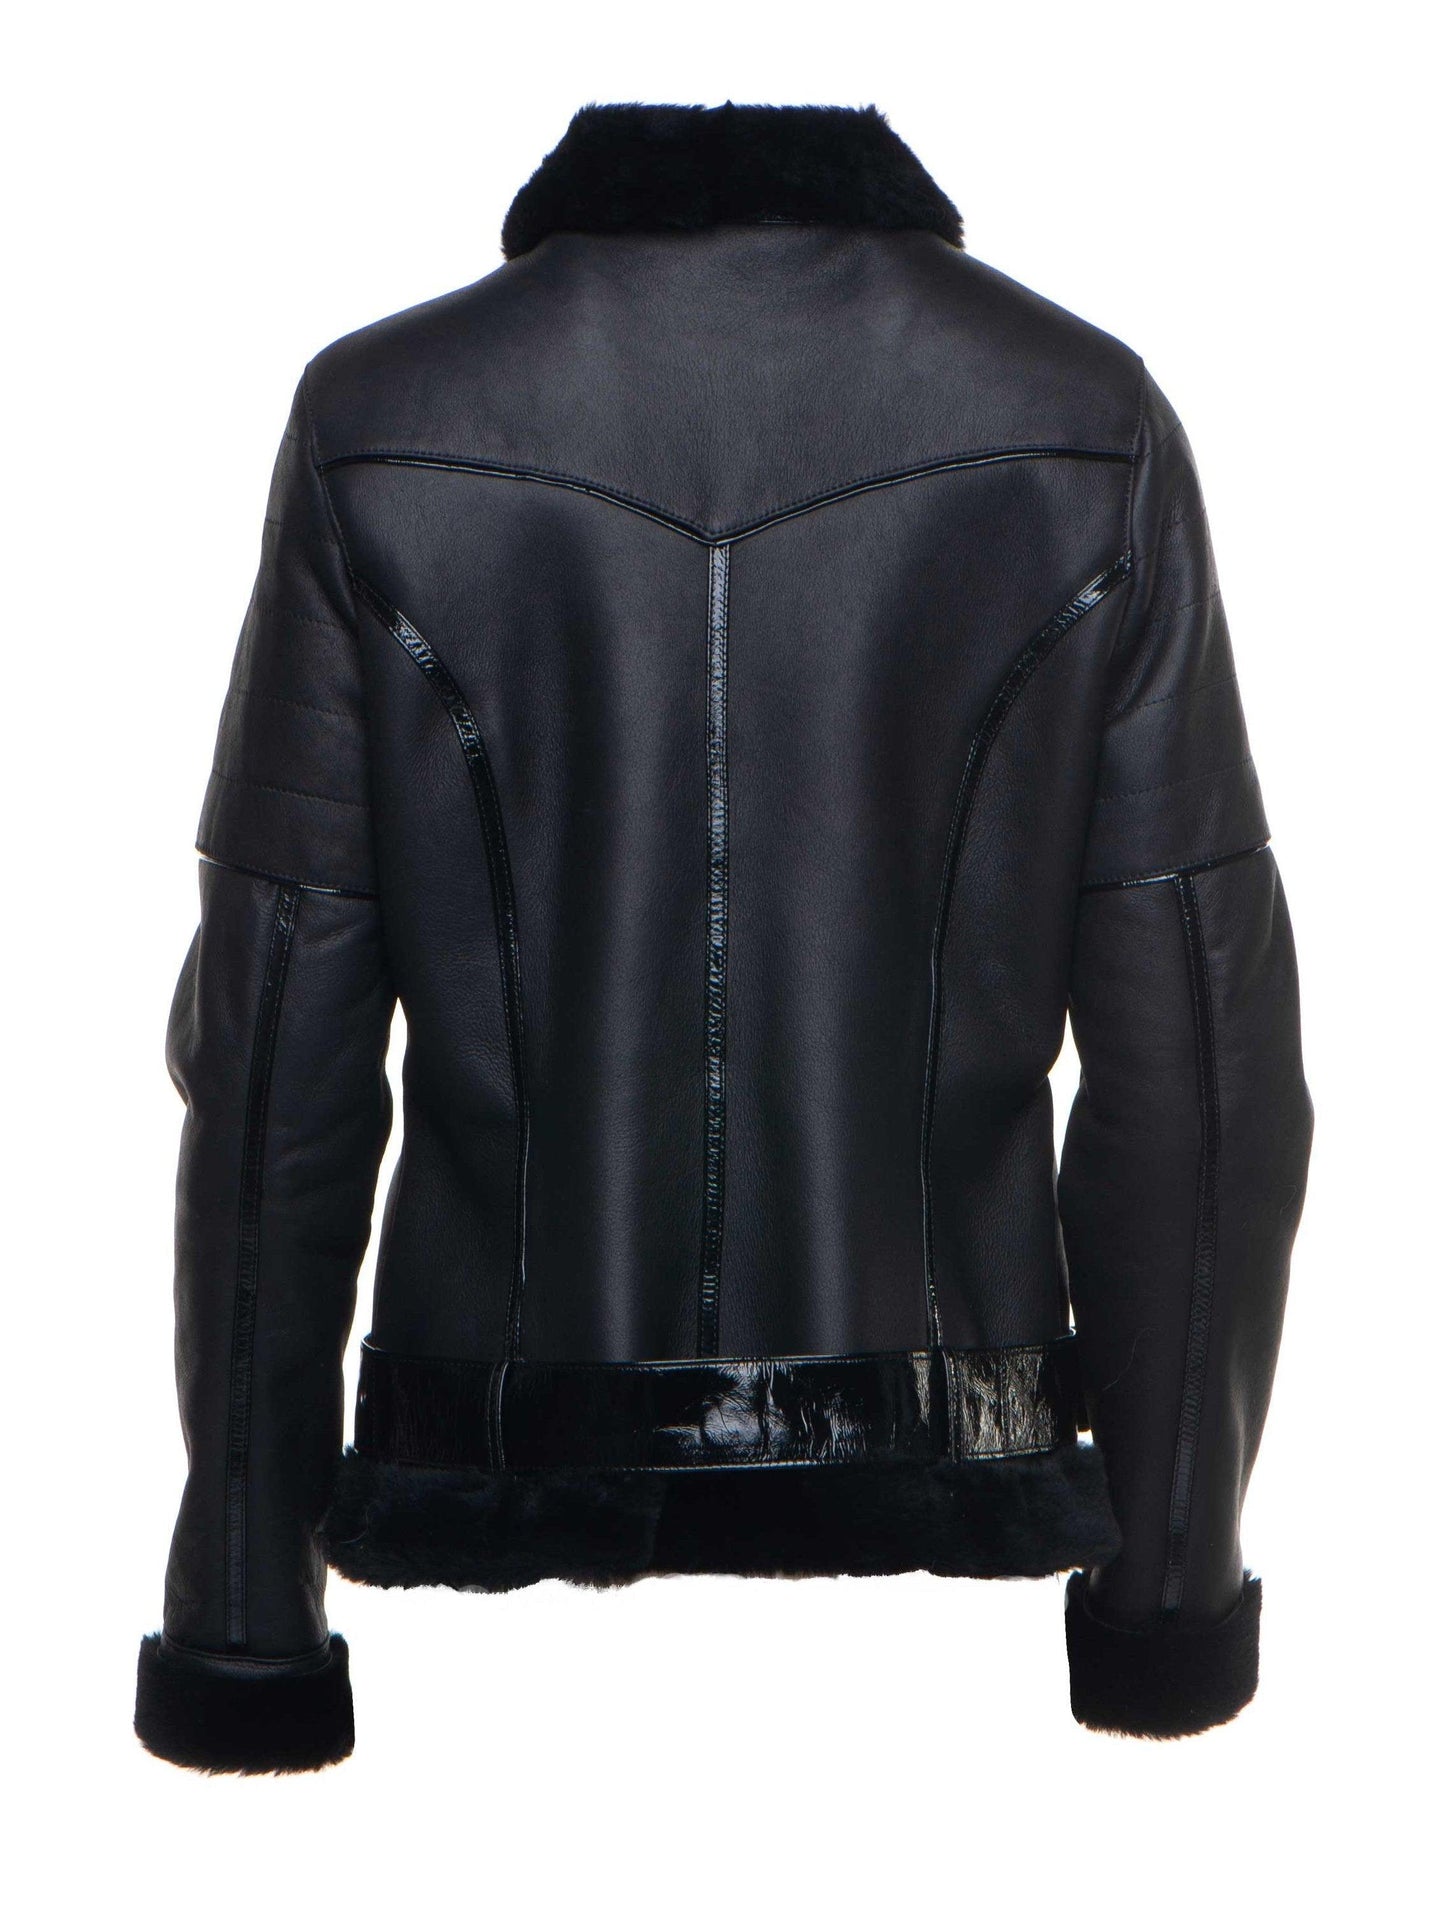 Tasha's B-3 Bomber Black Sheepskin Shearling Style Jacket For Women - Leather Loom